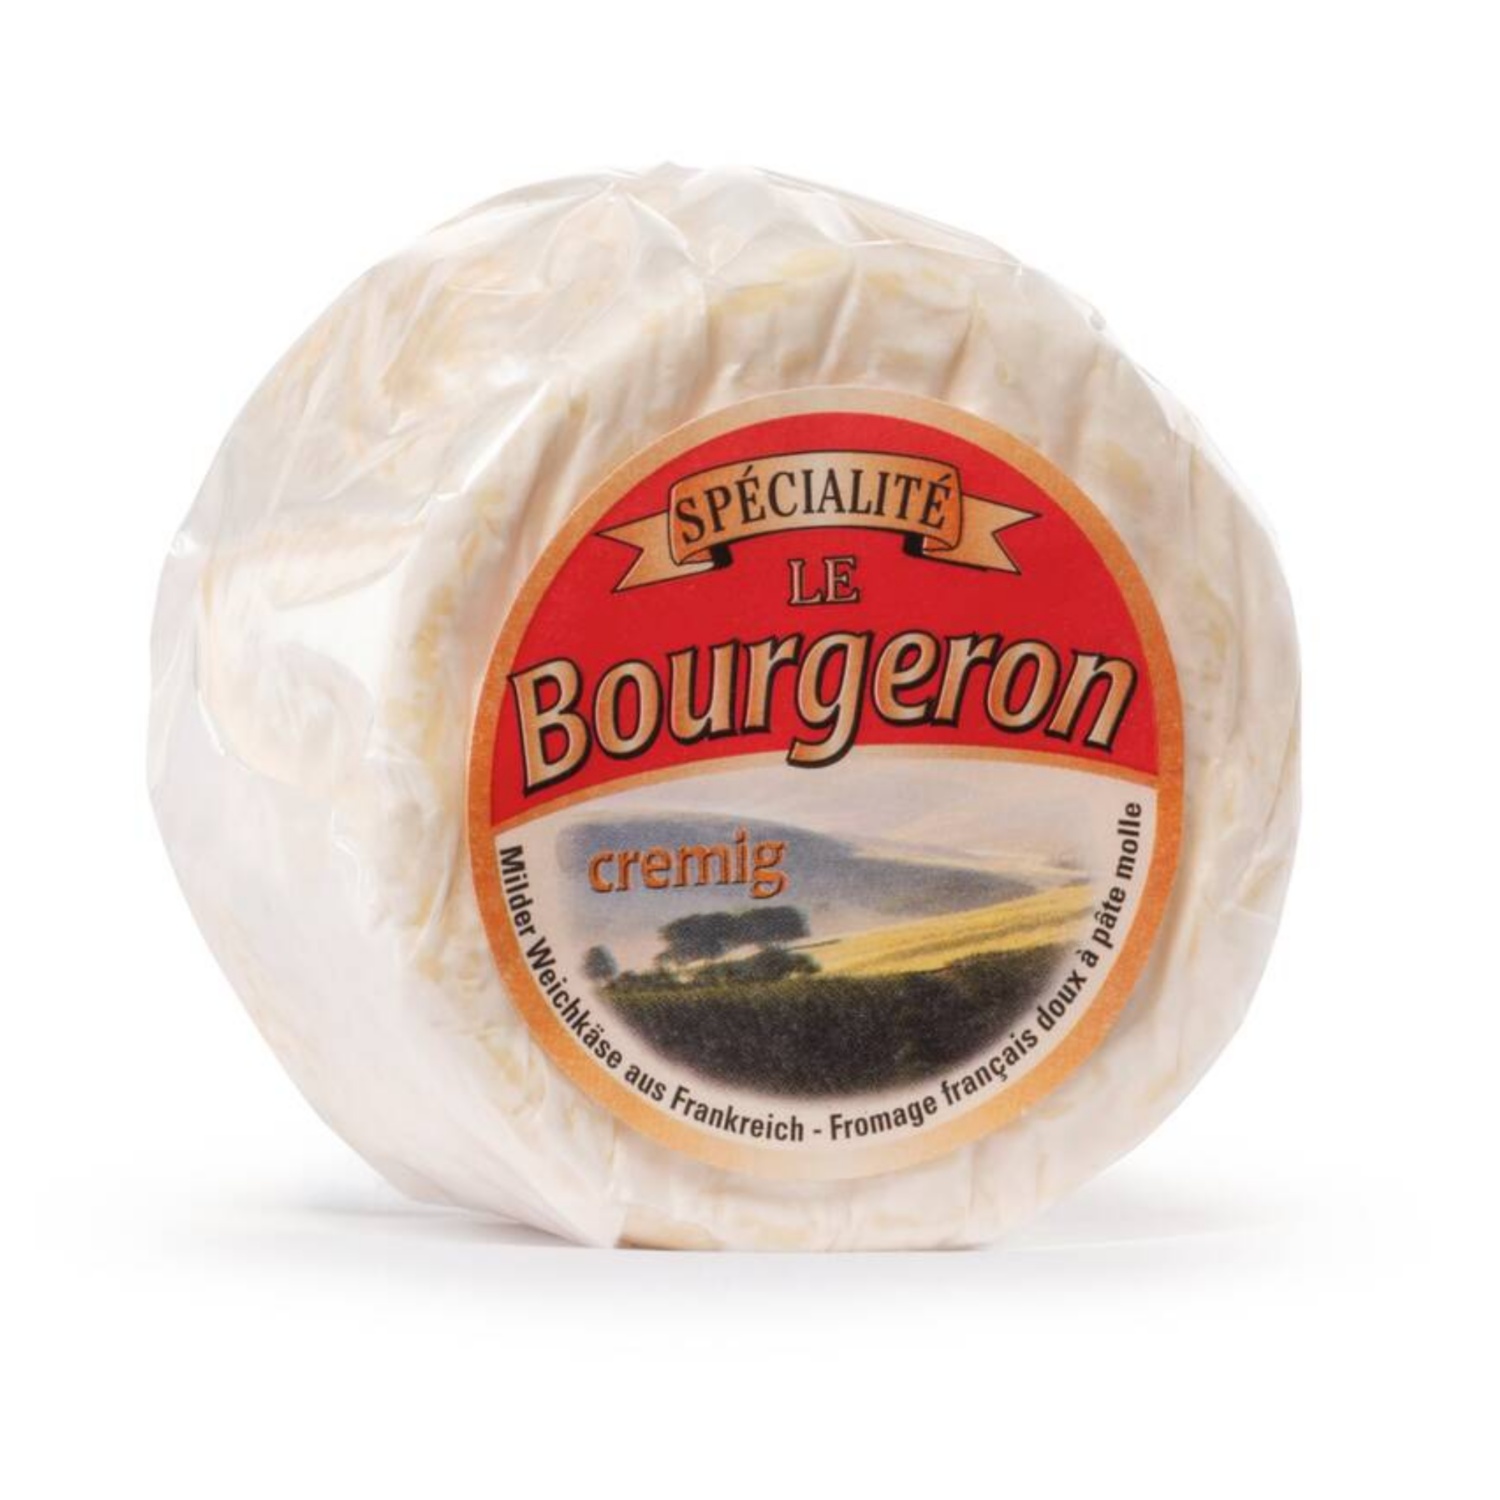 Francoske sirne specialitete, Bourgeron